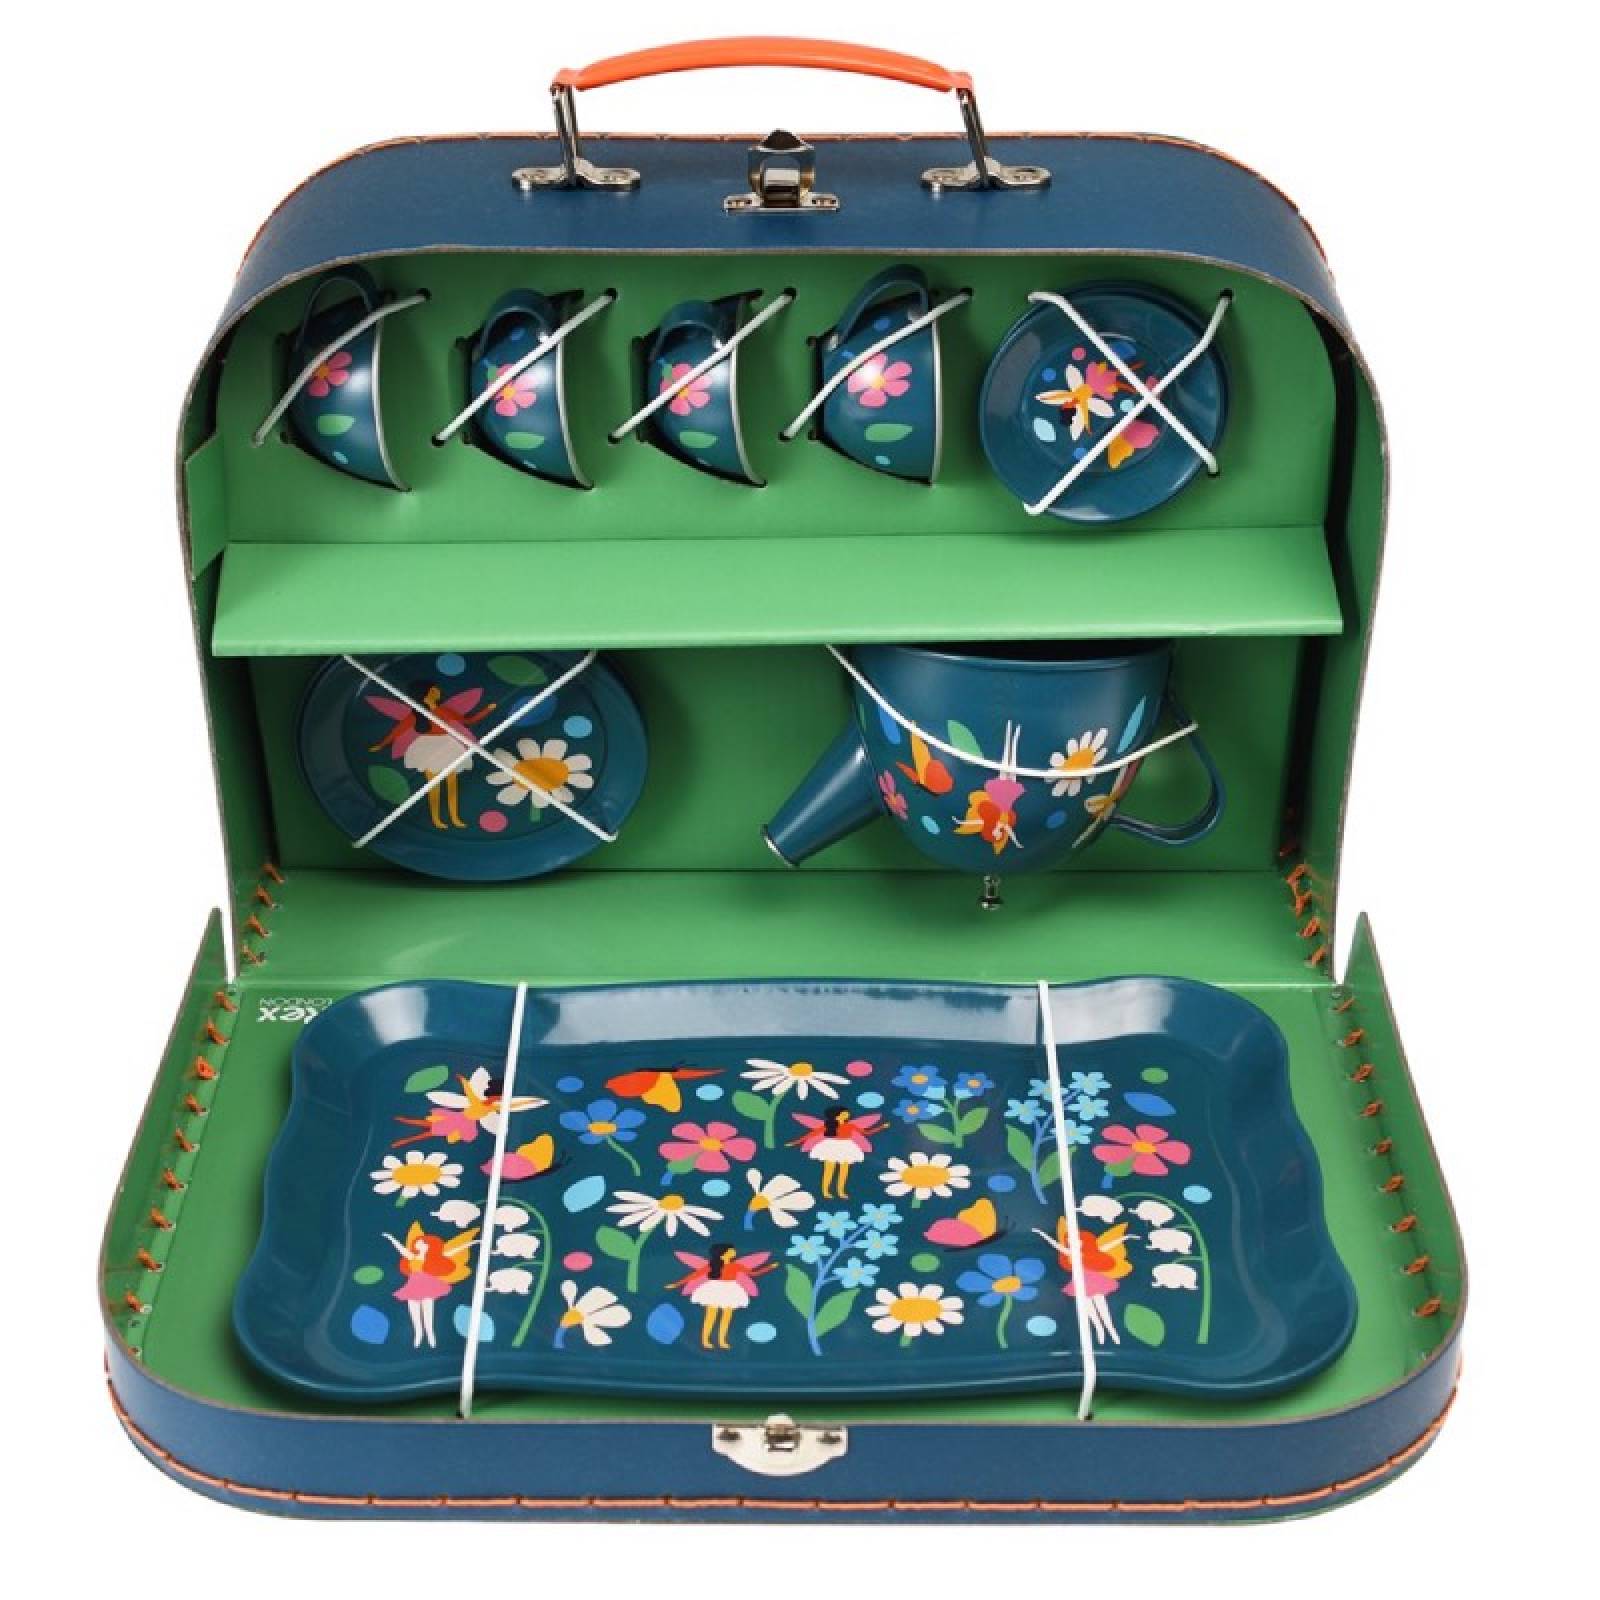 Fairies In The Garden Metal Tea Set In Suitcase 3+ thumbnails